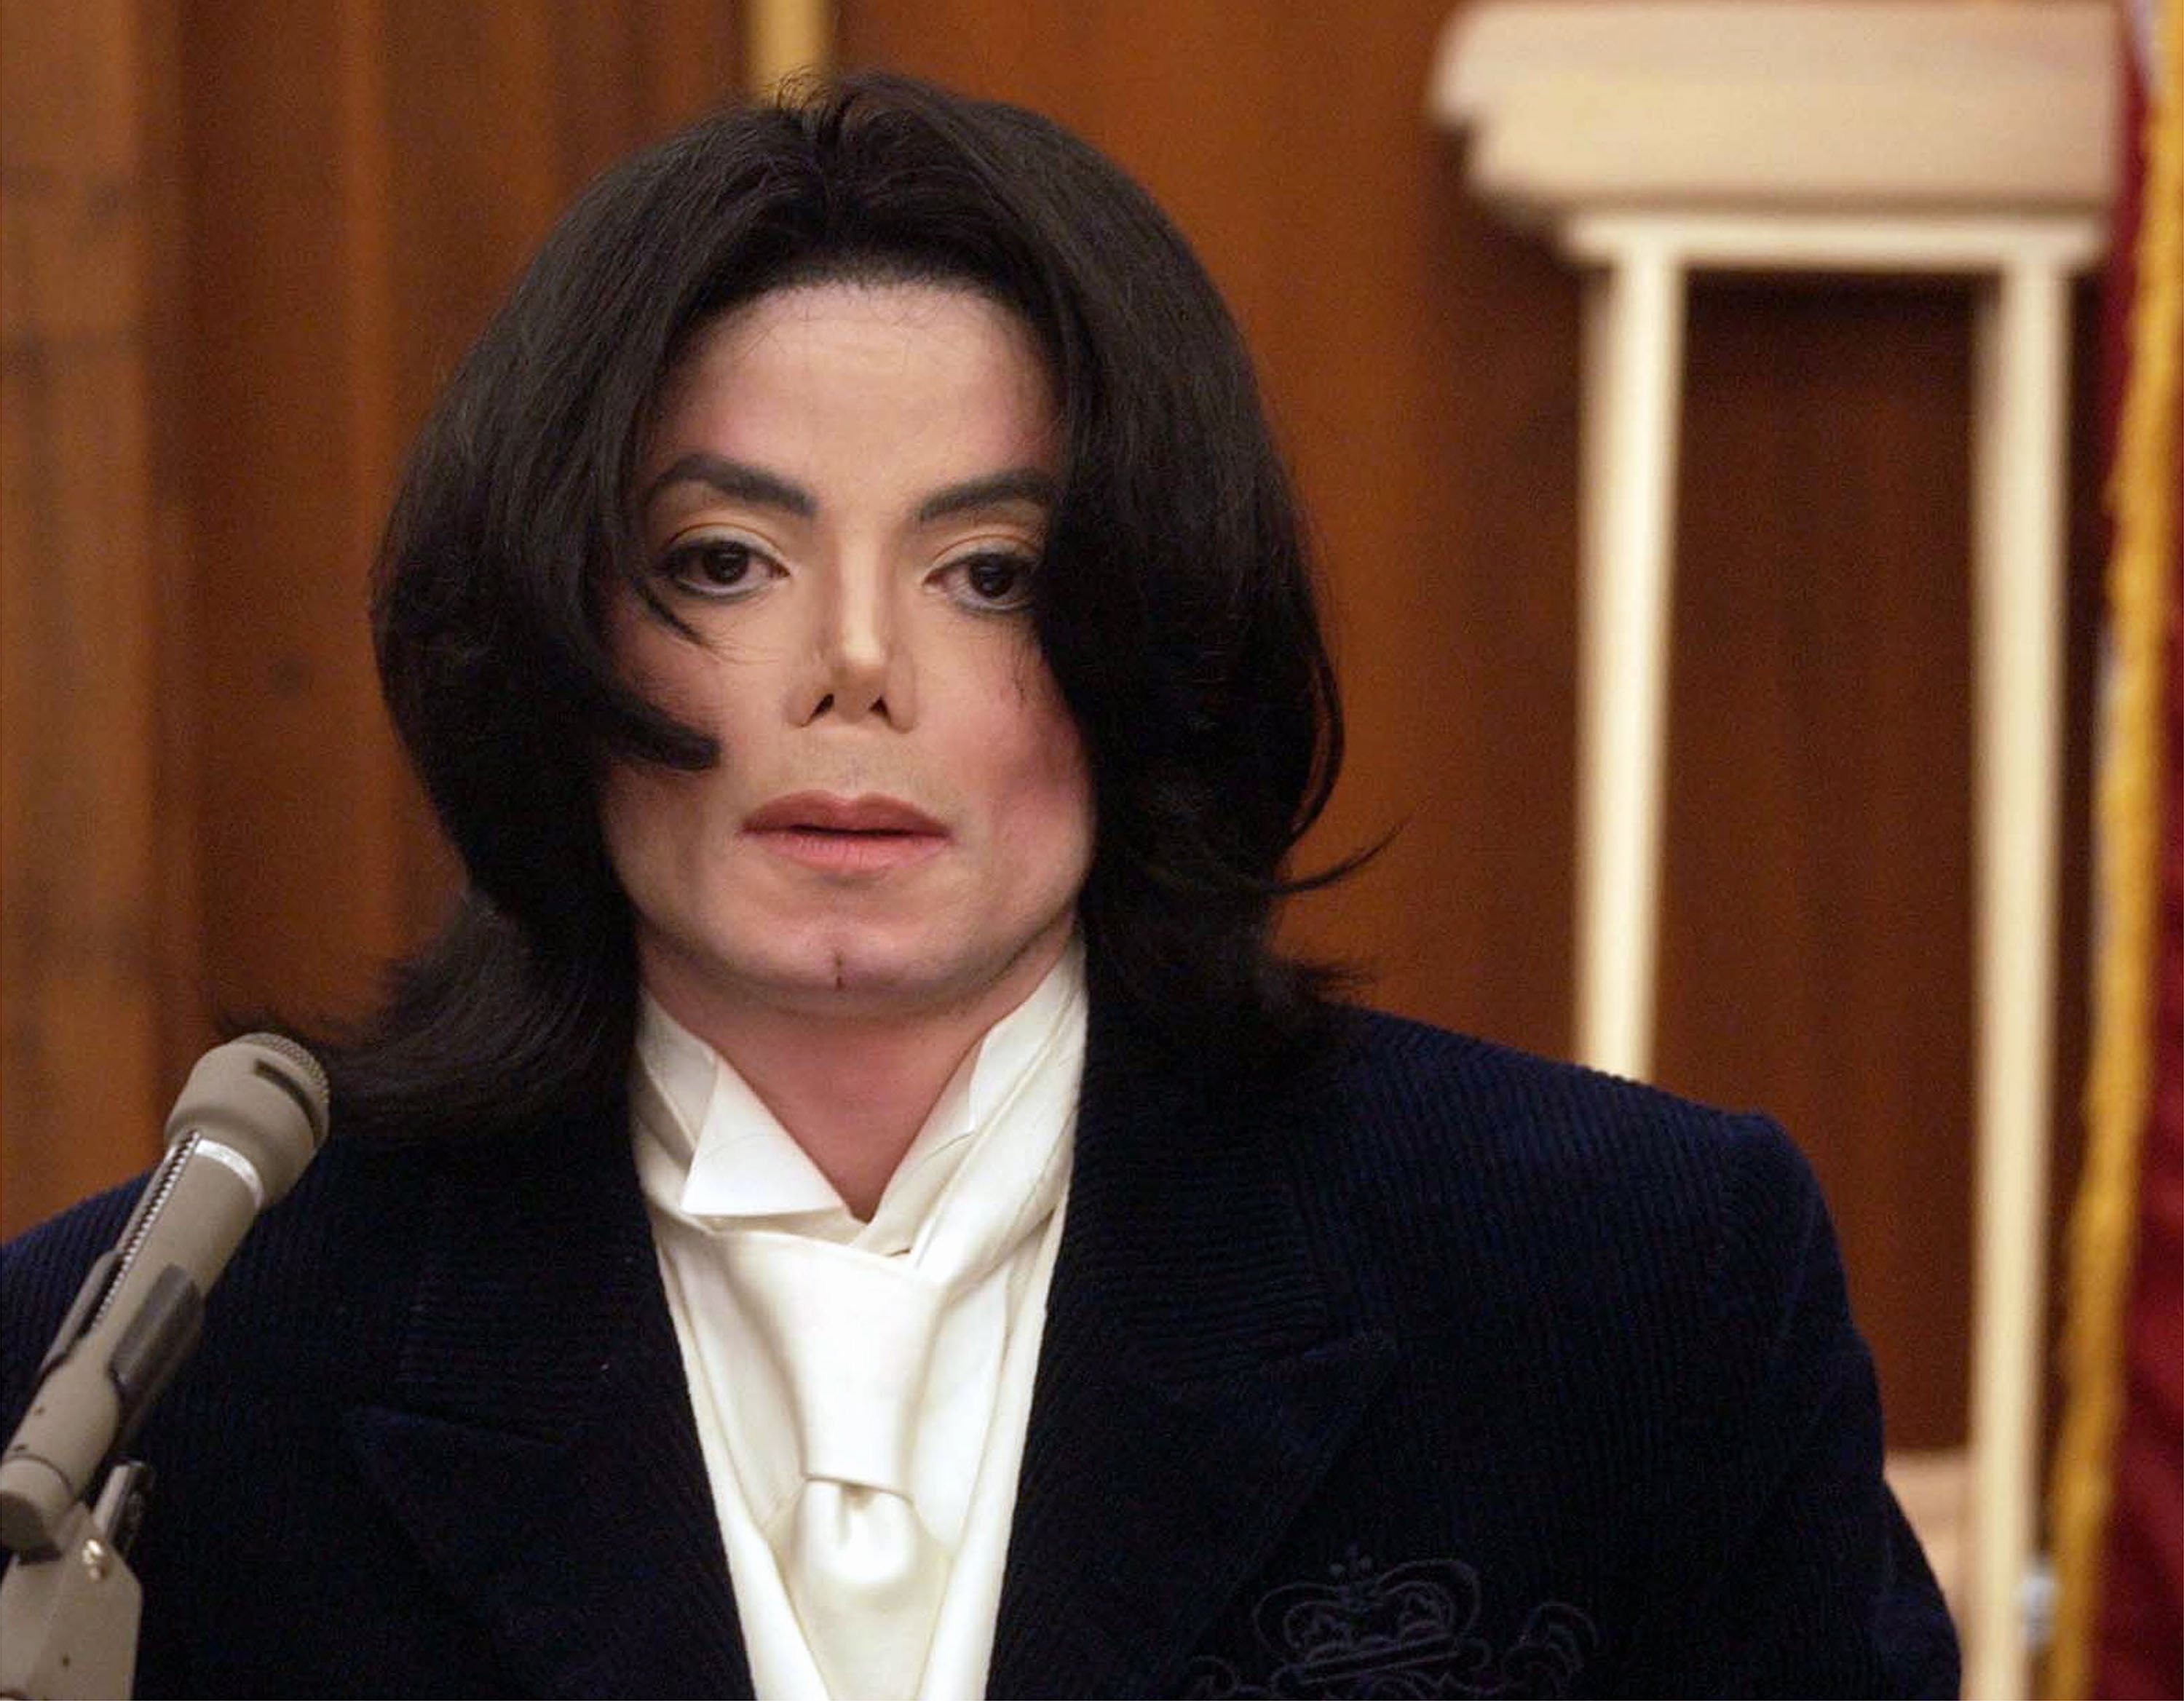 Michael Jackson. I Image: Getty Images.